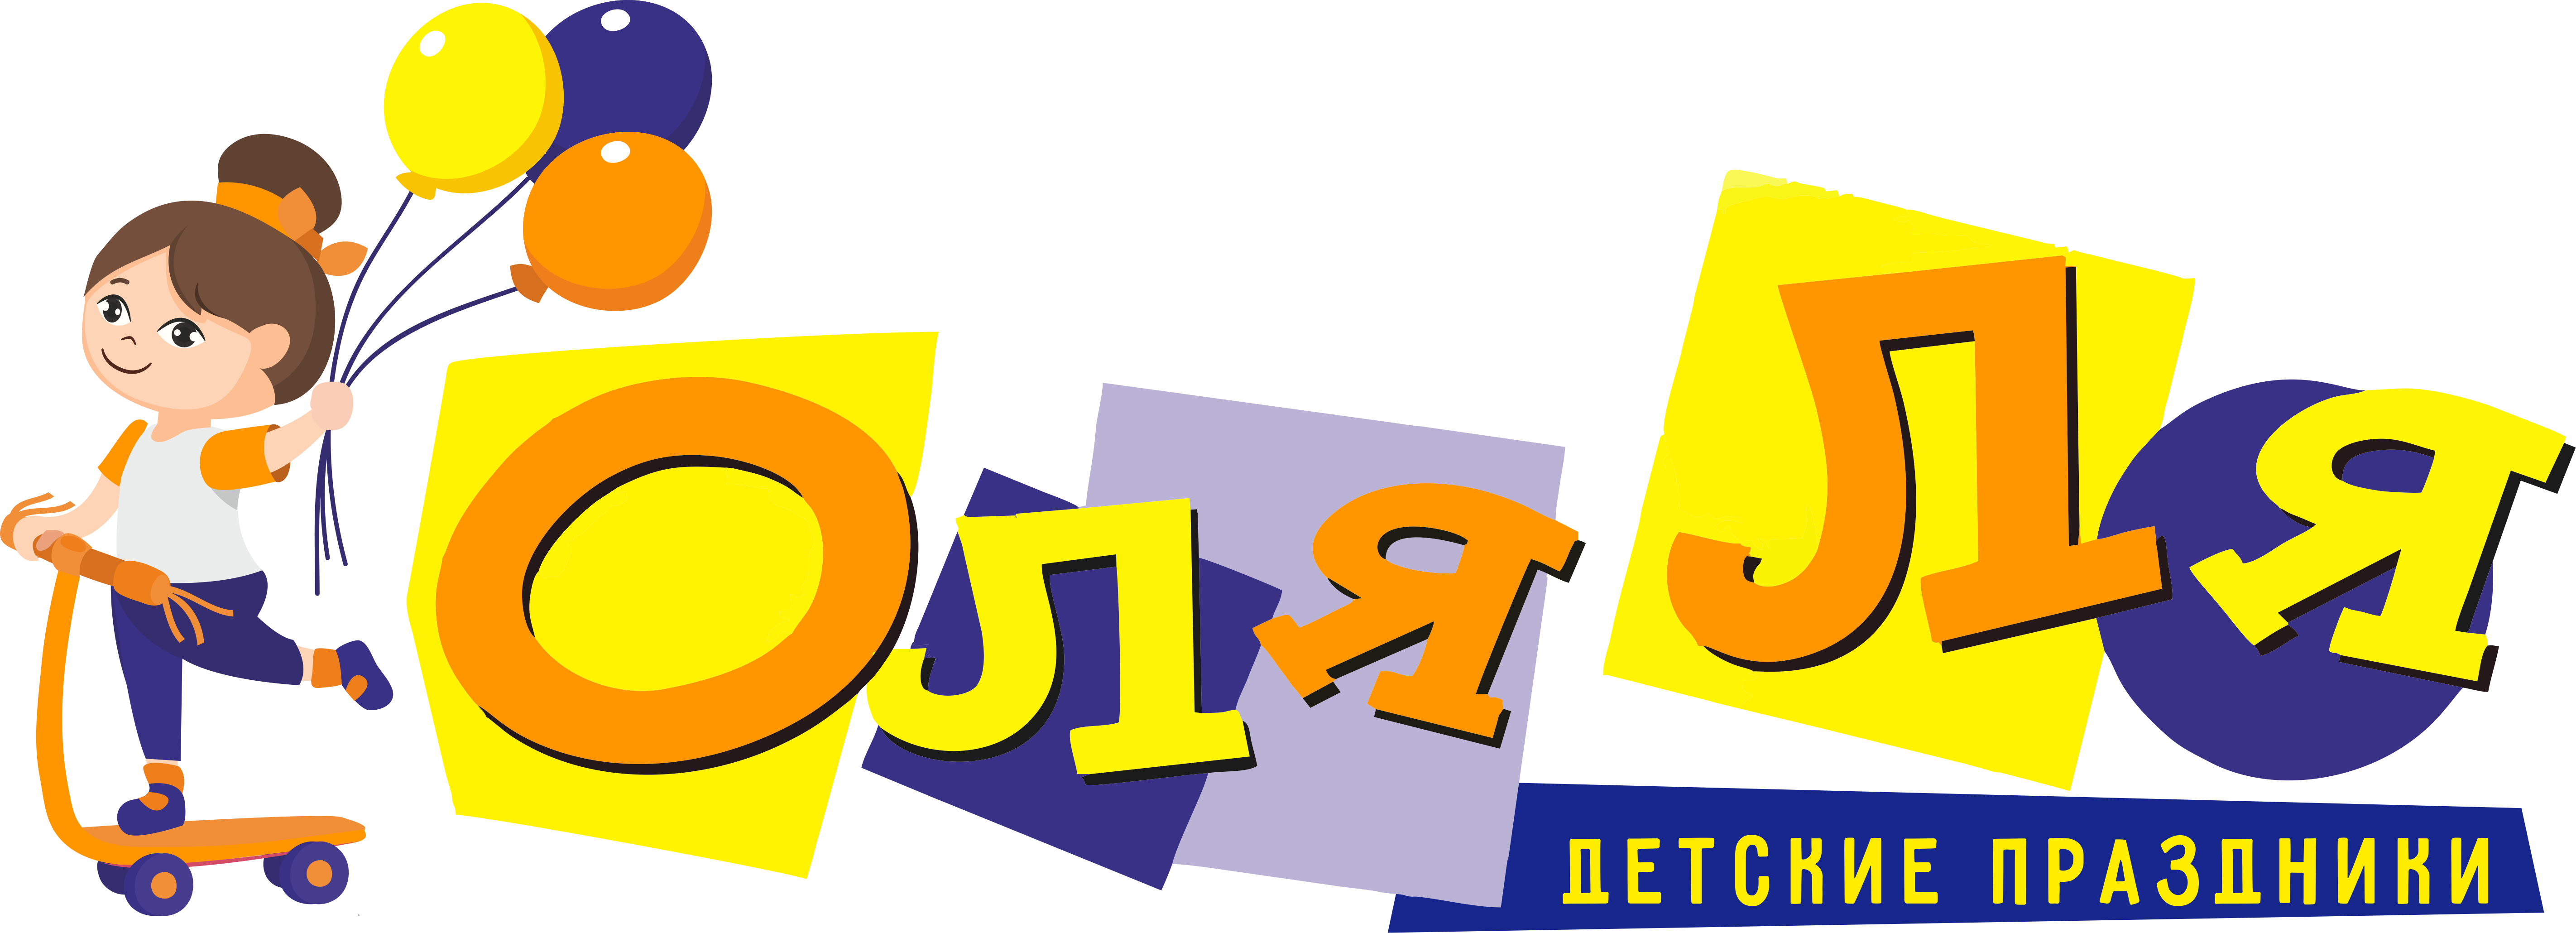 Логотип компании Логика